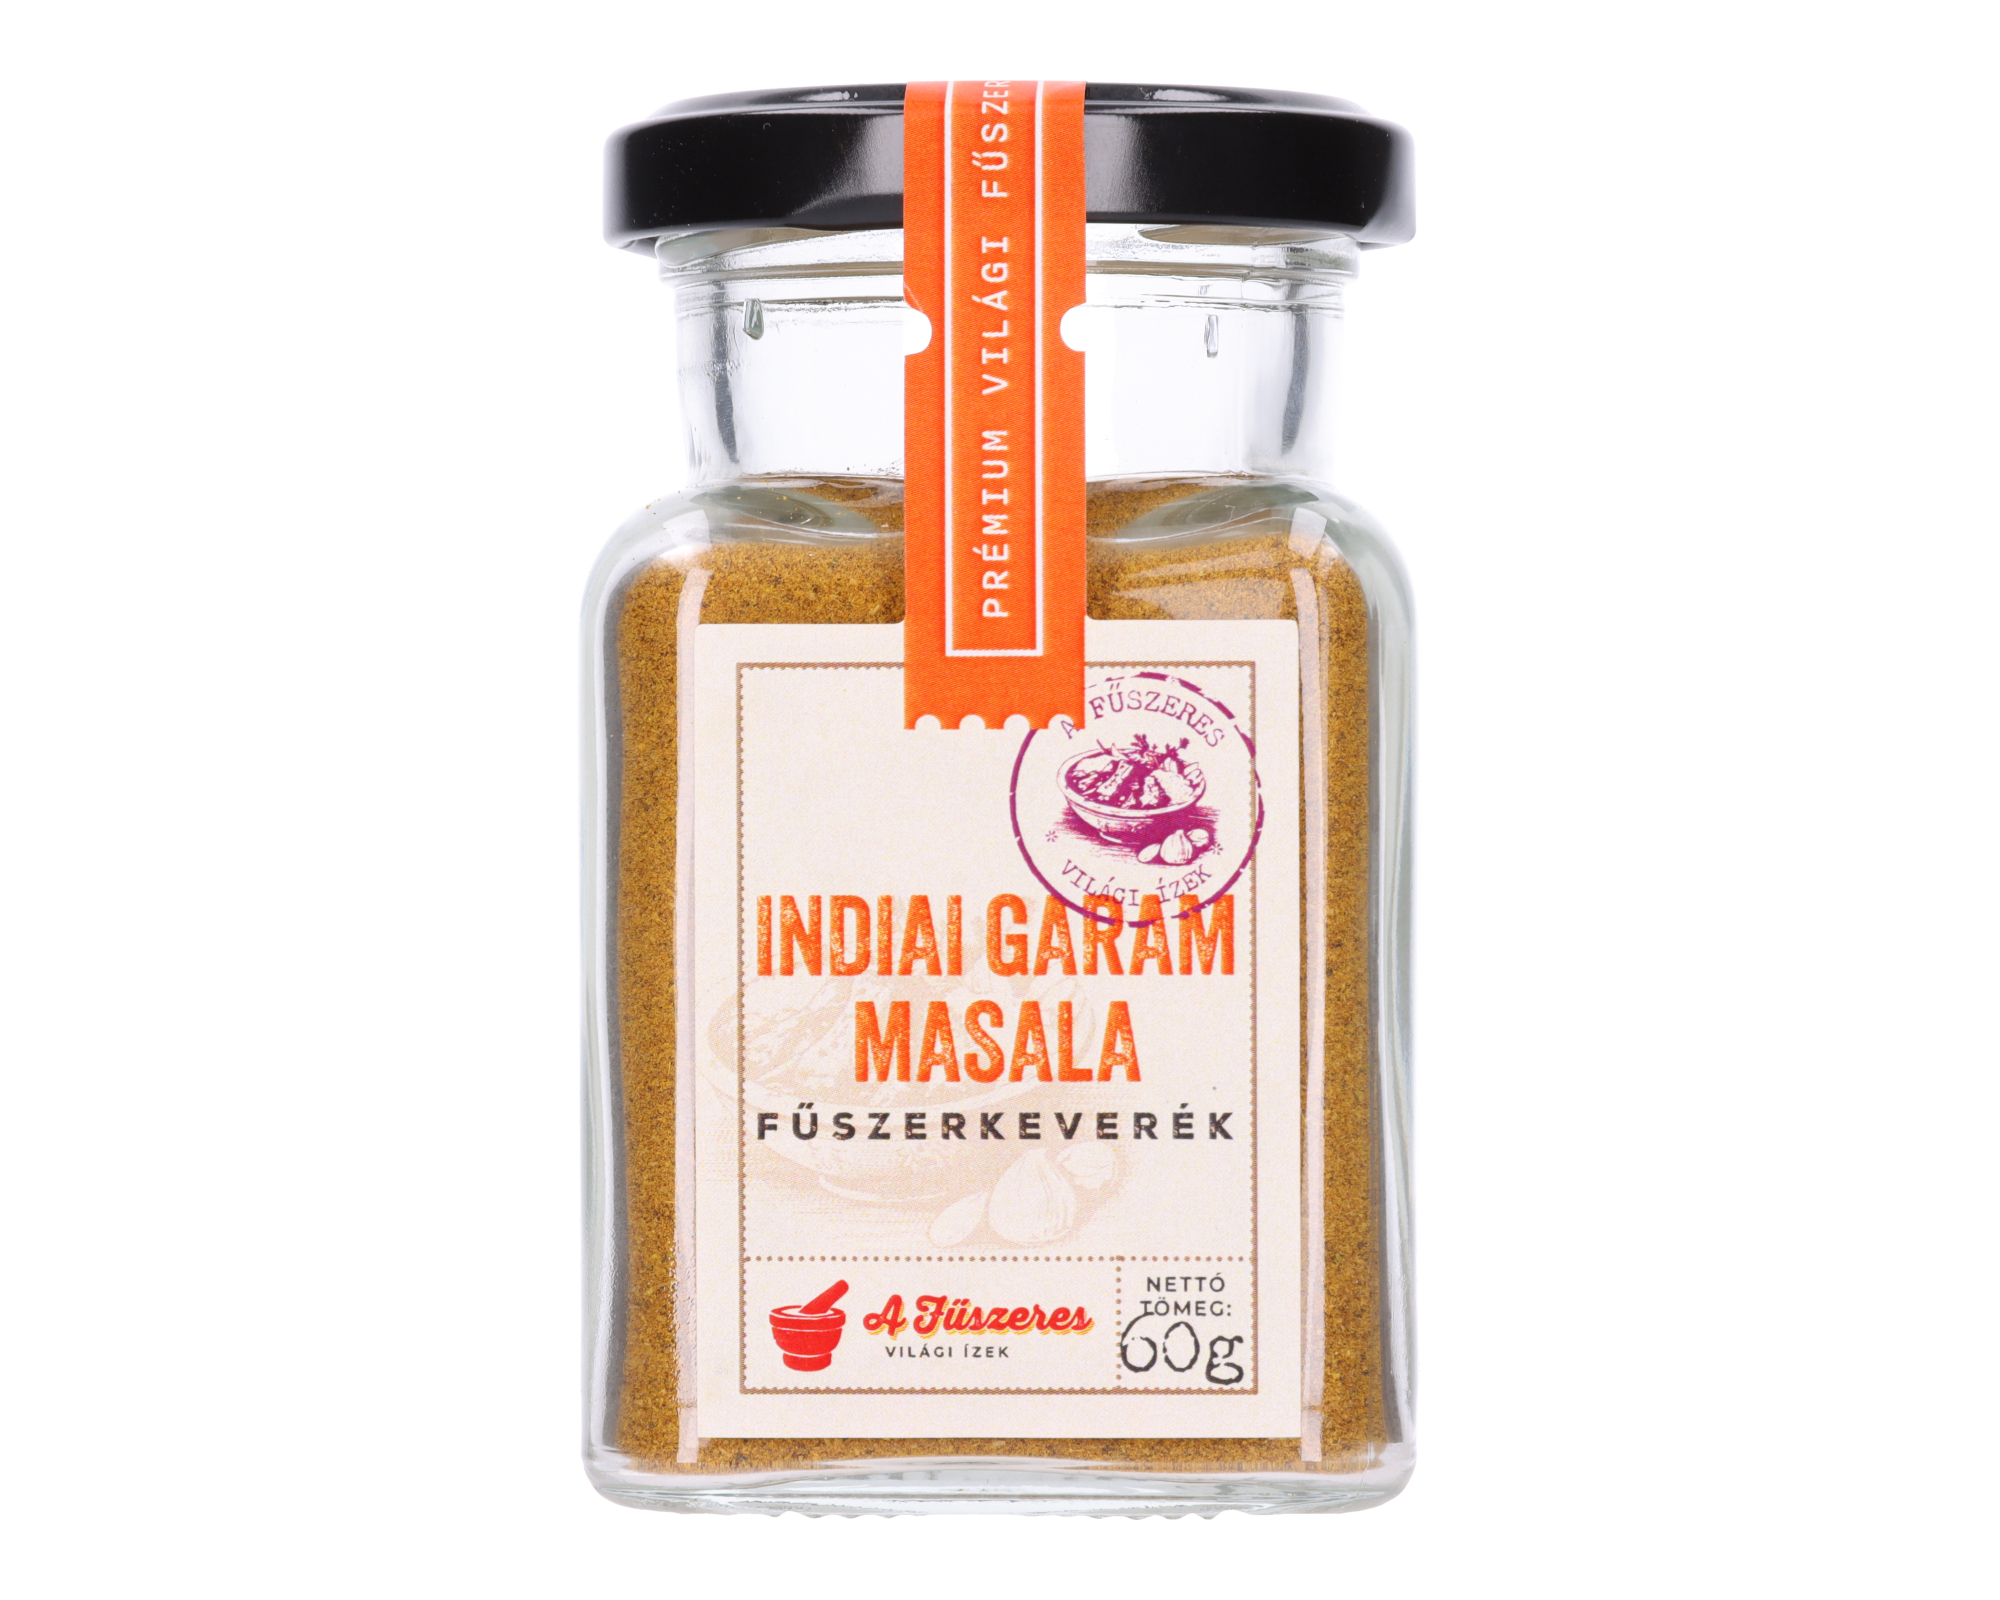 A Fűszeres: Indiai Garam Masala fűszerkeverék 60 g